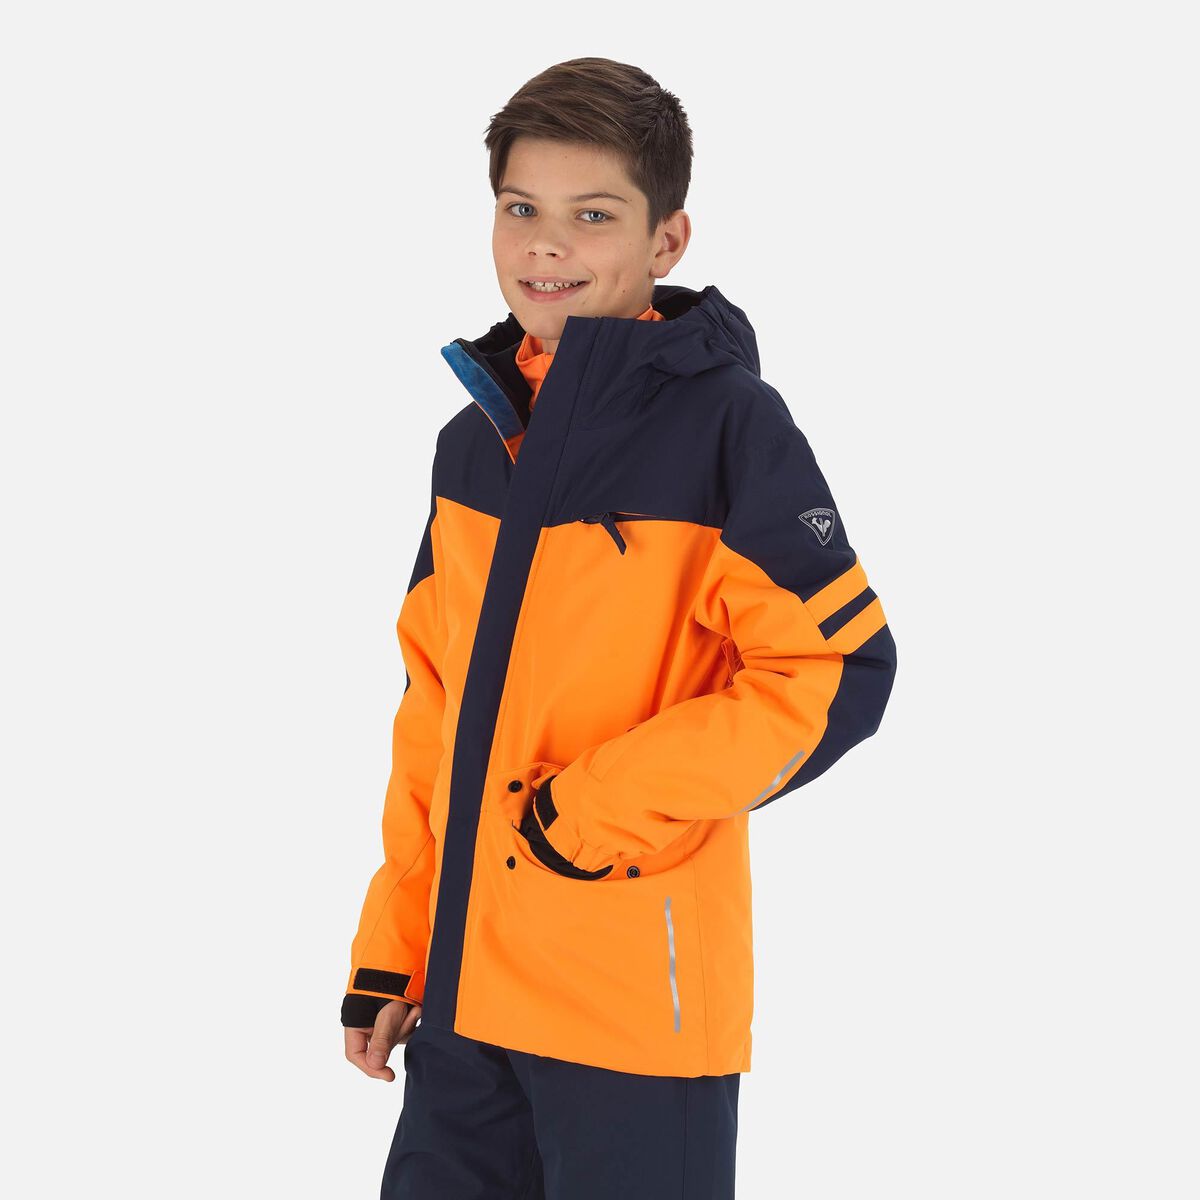 Boys' React Ski Jacket